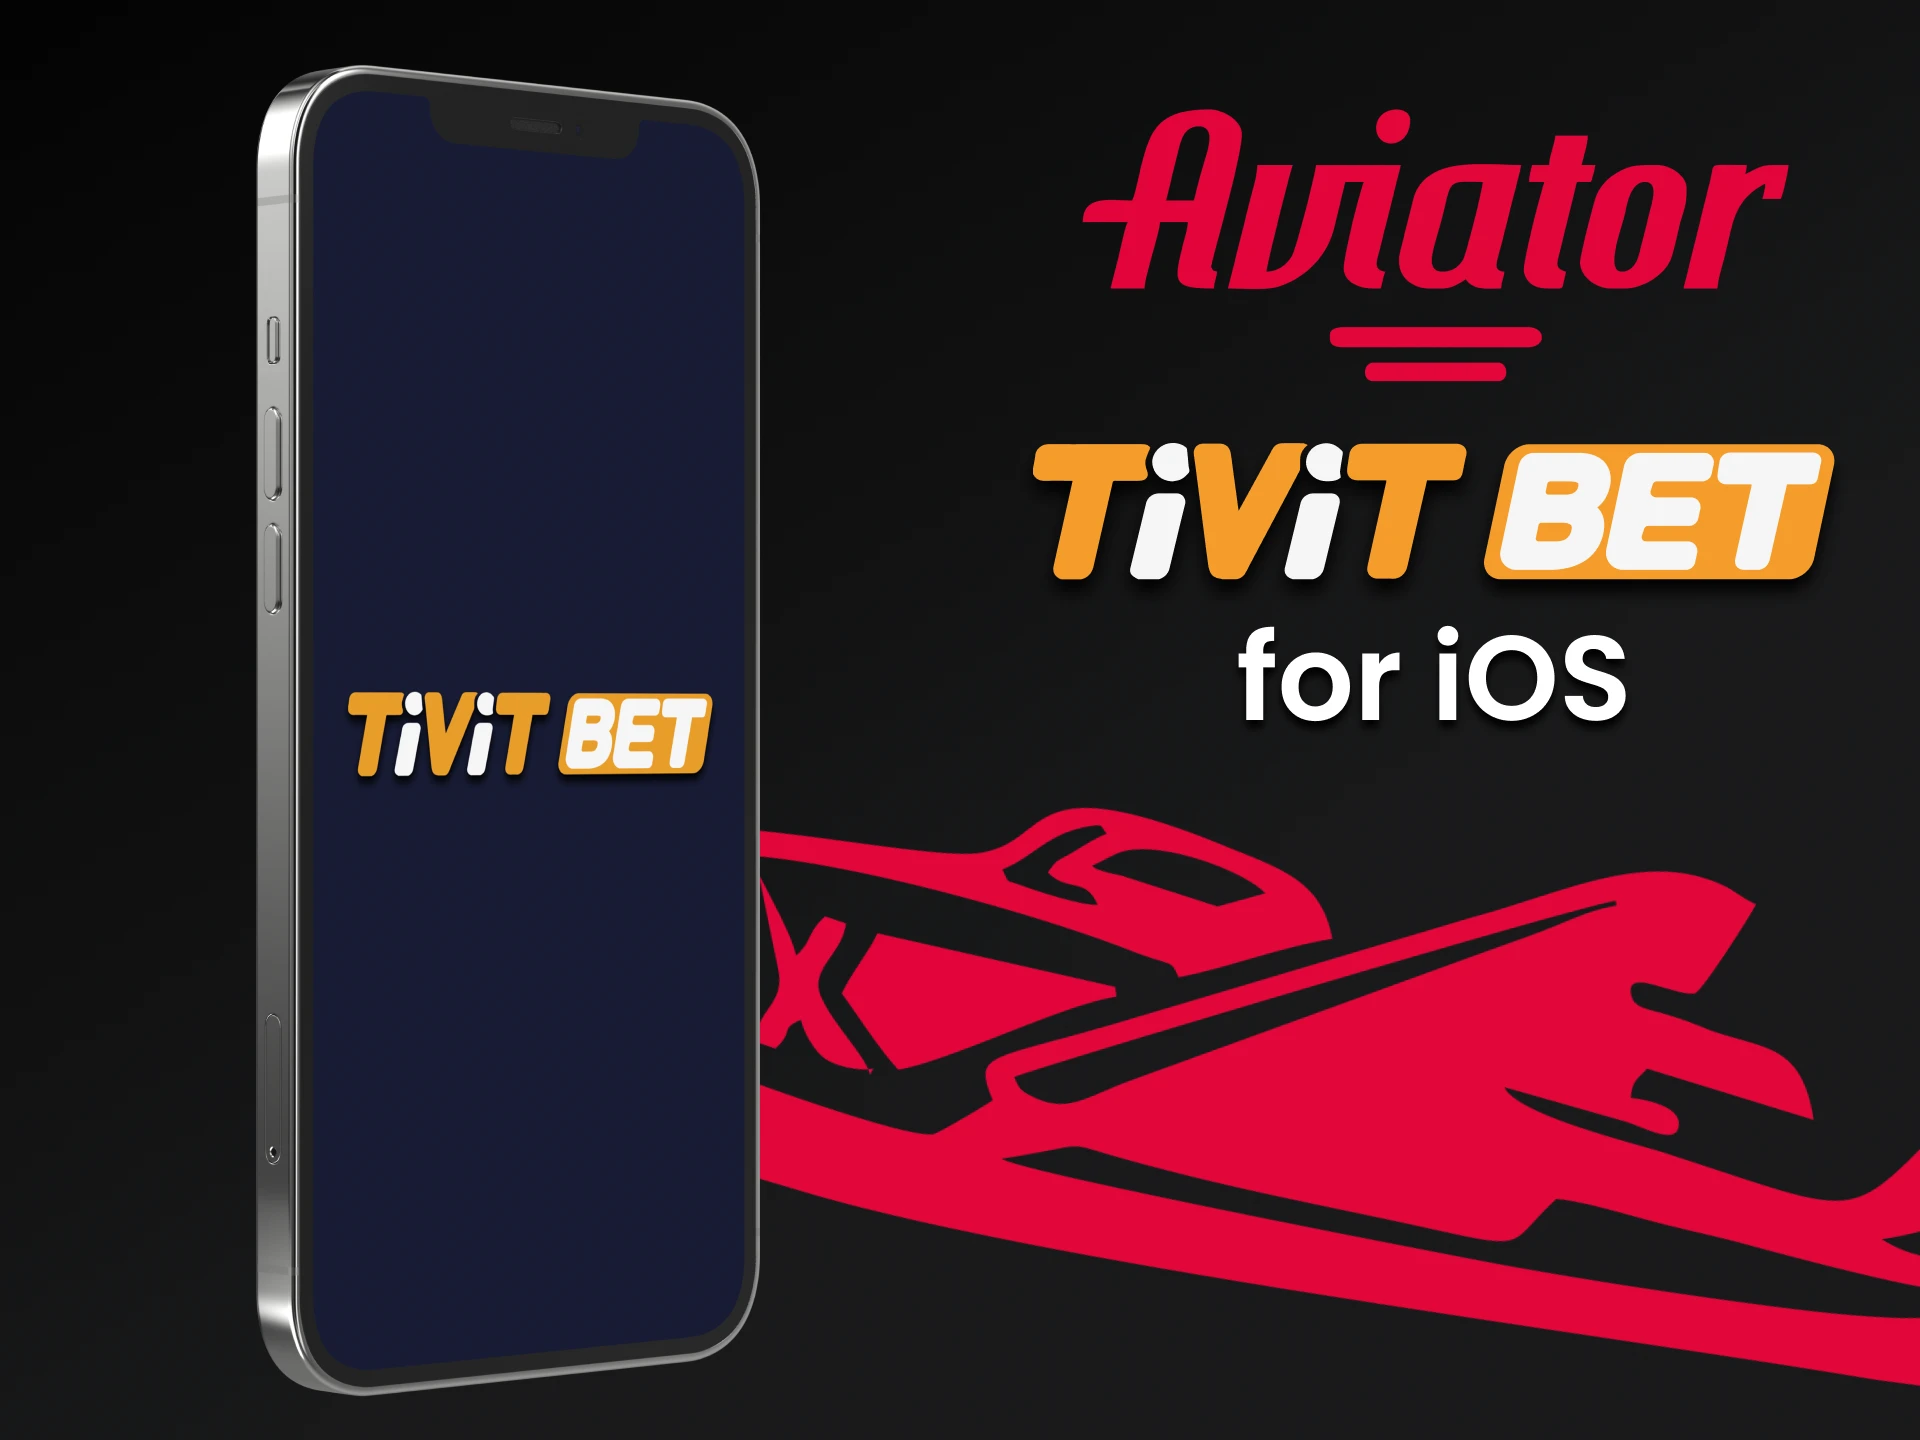 Play Aviator on the Tivitbet iOS app.